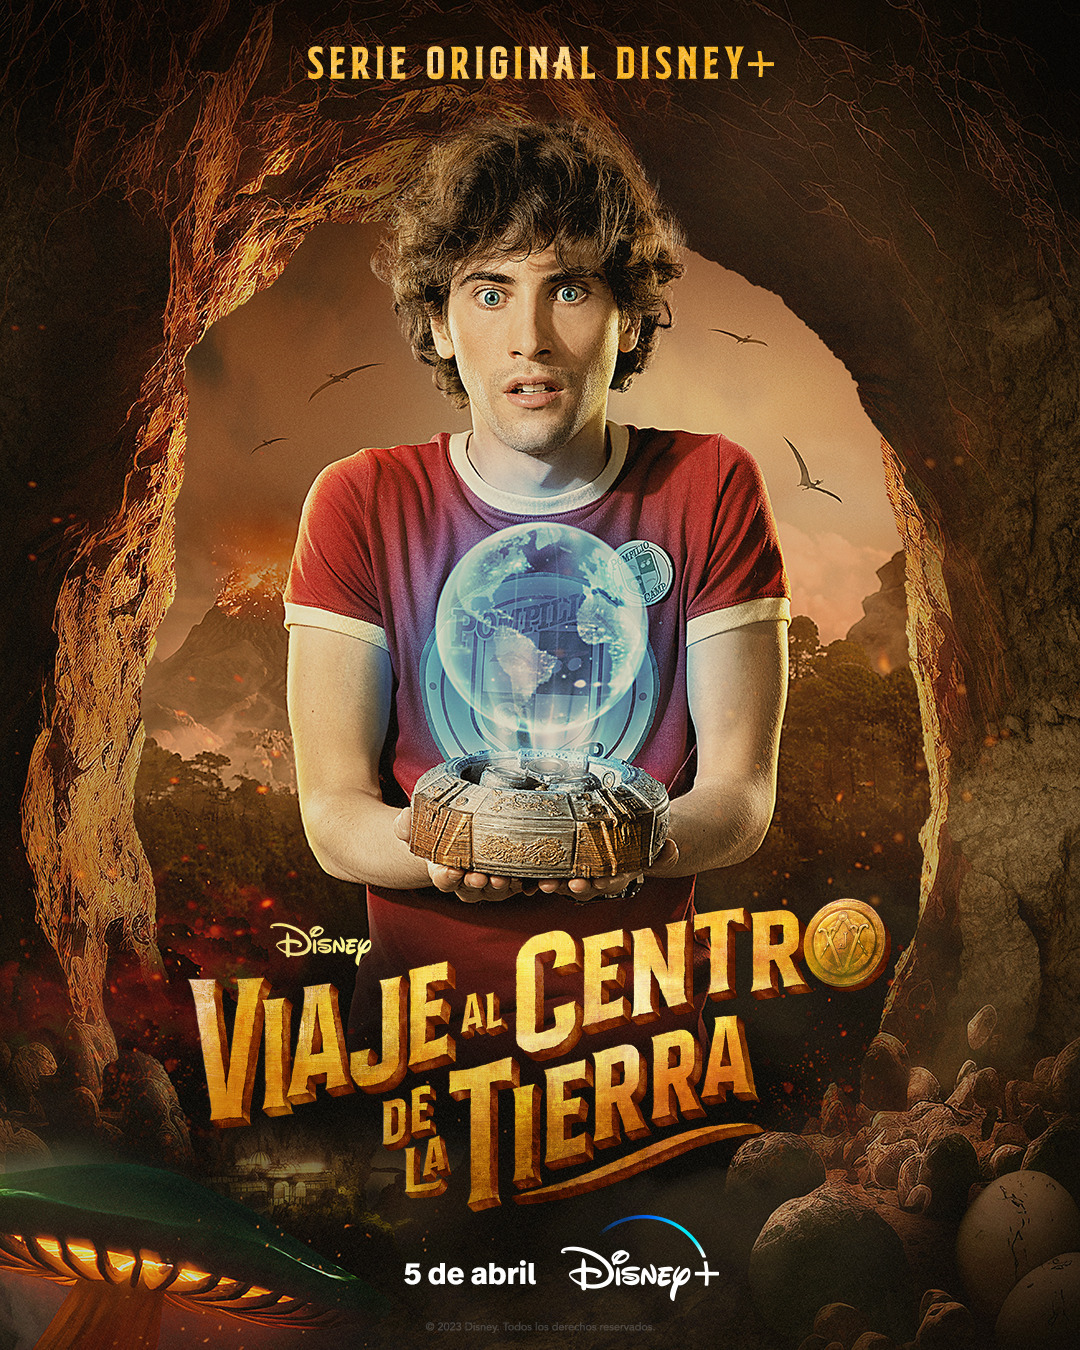 Extra Large TV Poster Image for Viaje al centro de la tierra (#5 of 8)